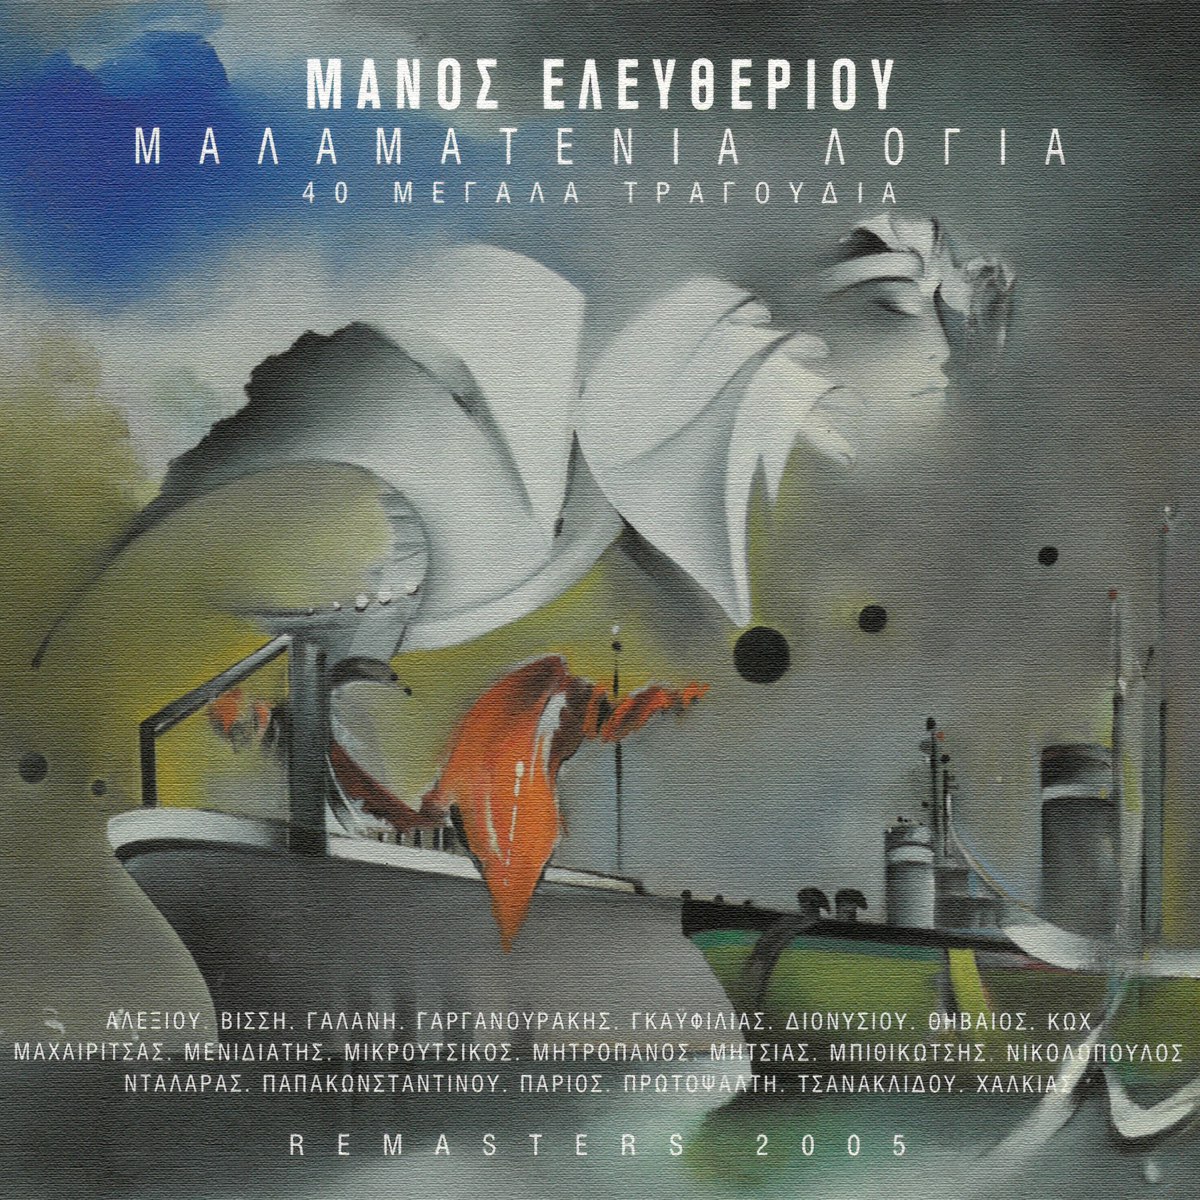 Malamatenia Logia - 40 Megala Tragoudia - Album by Manos Eleftheriou -  Apple Music